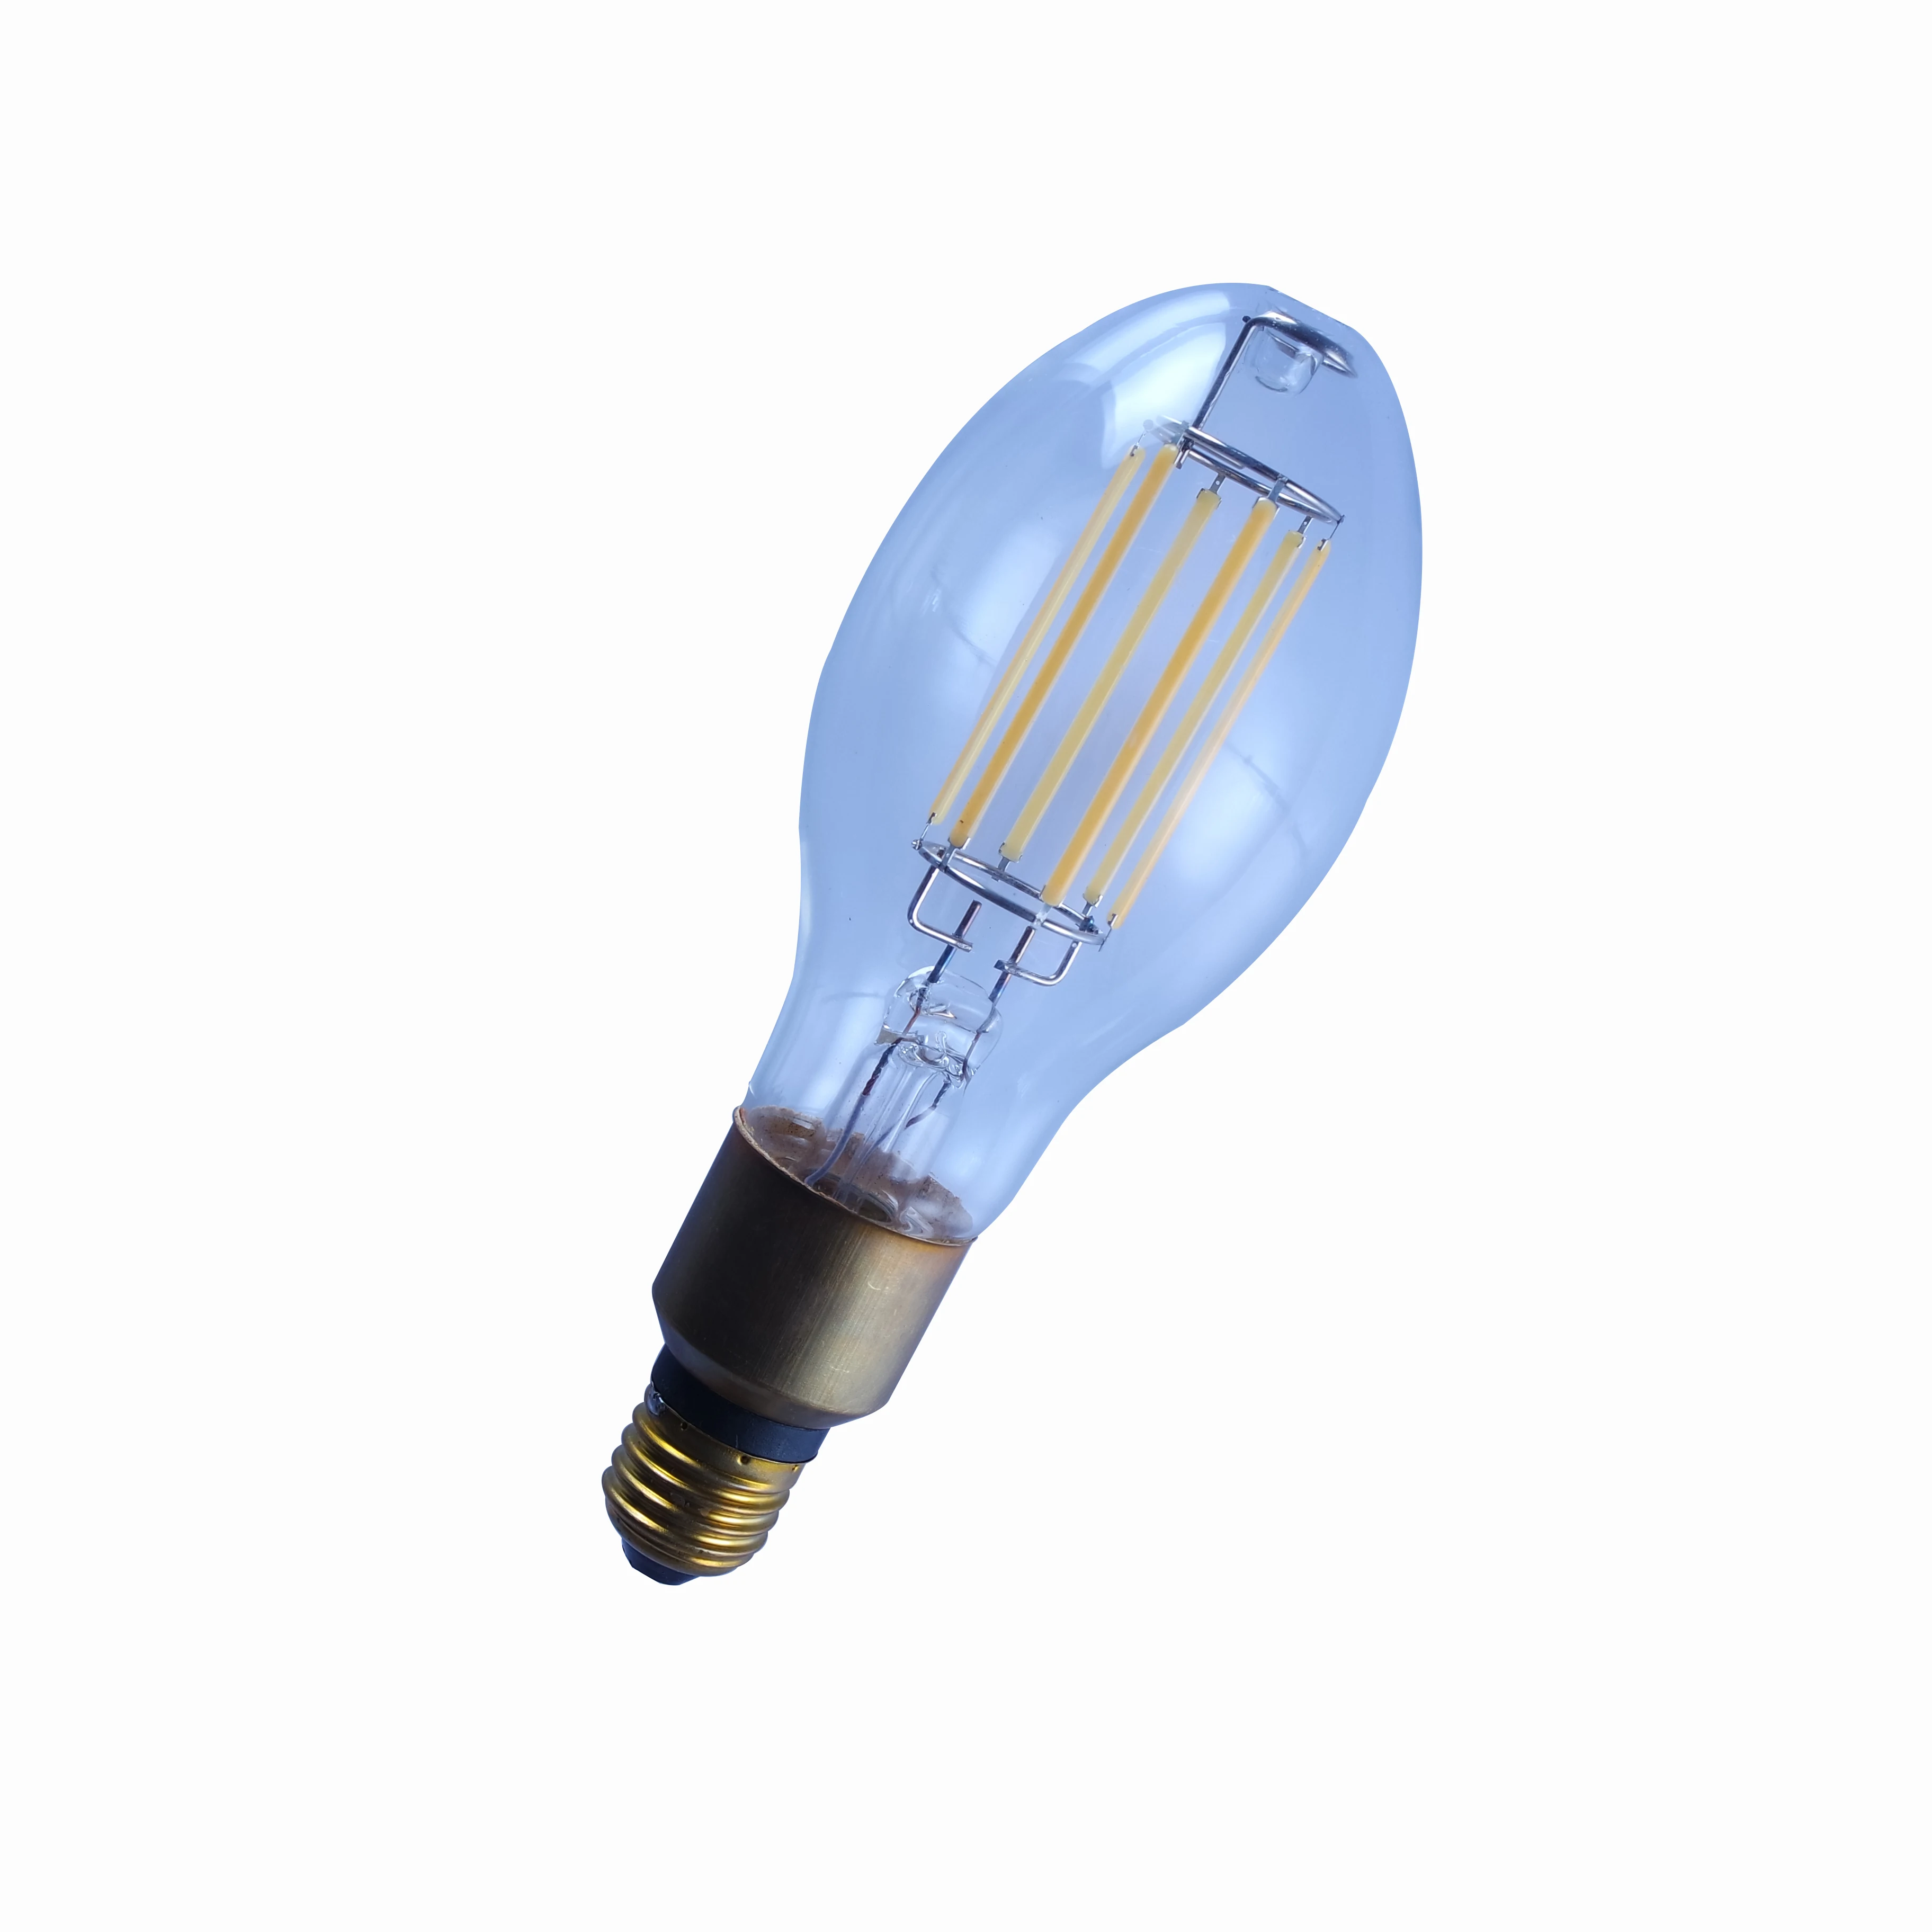 25W ED76 high wattage LED Filament light